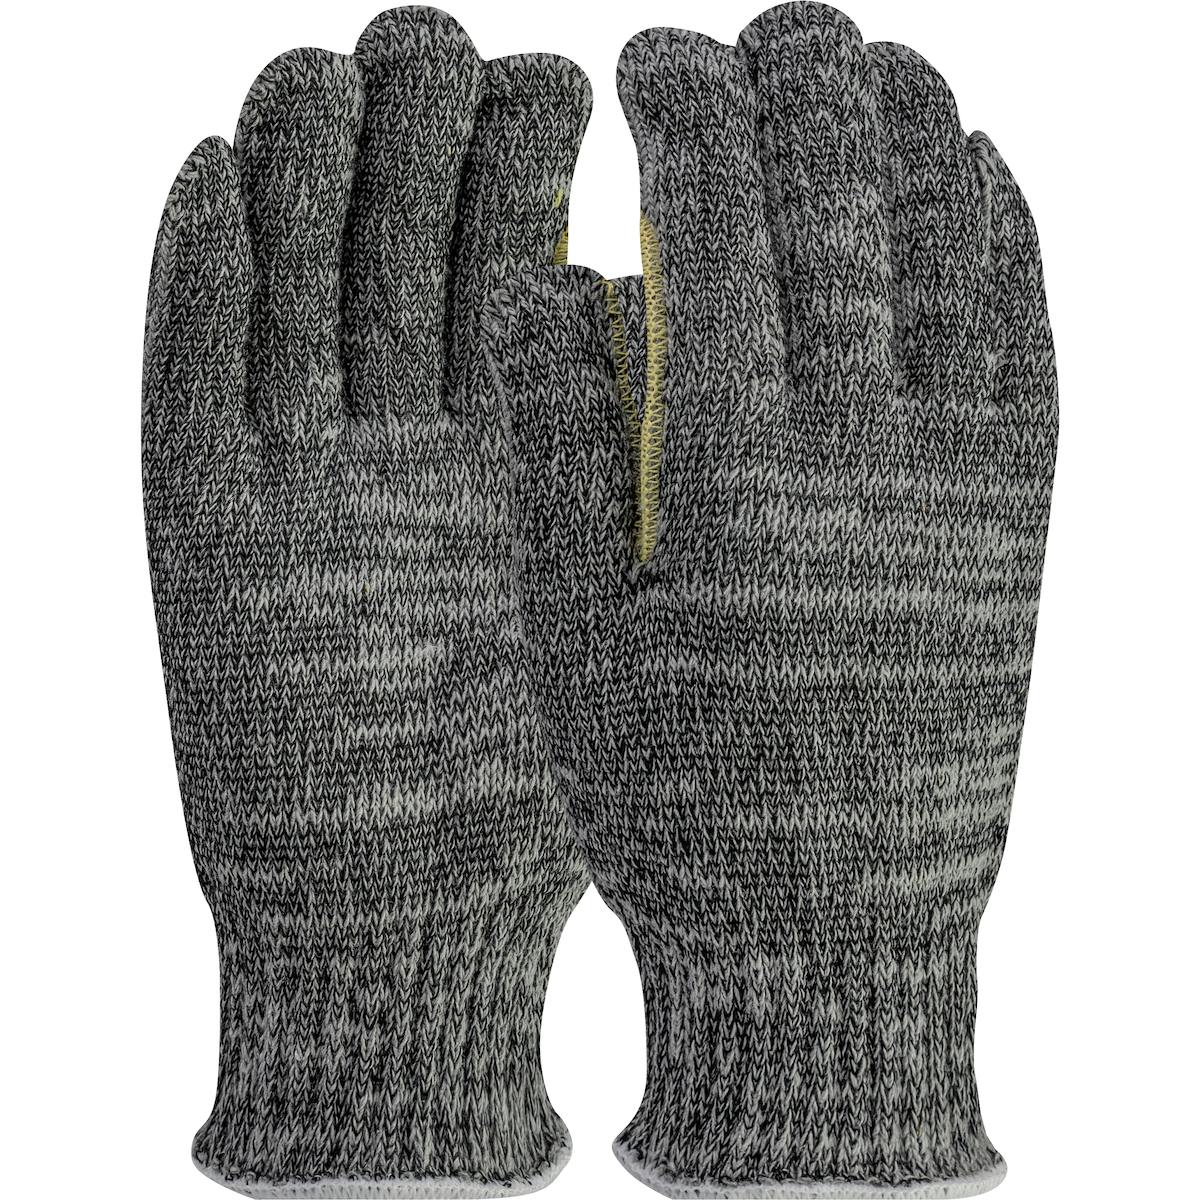 Kut Gard® Seamless Knit ATA® / Cotton Blended Glove - Heavy Weight (MATPBK40GYPL-OERT)